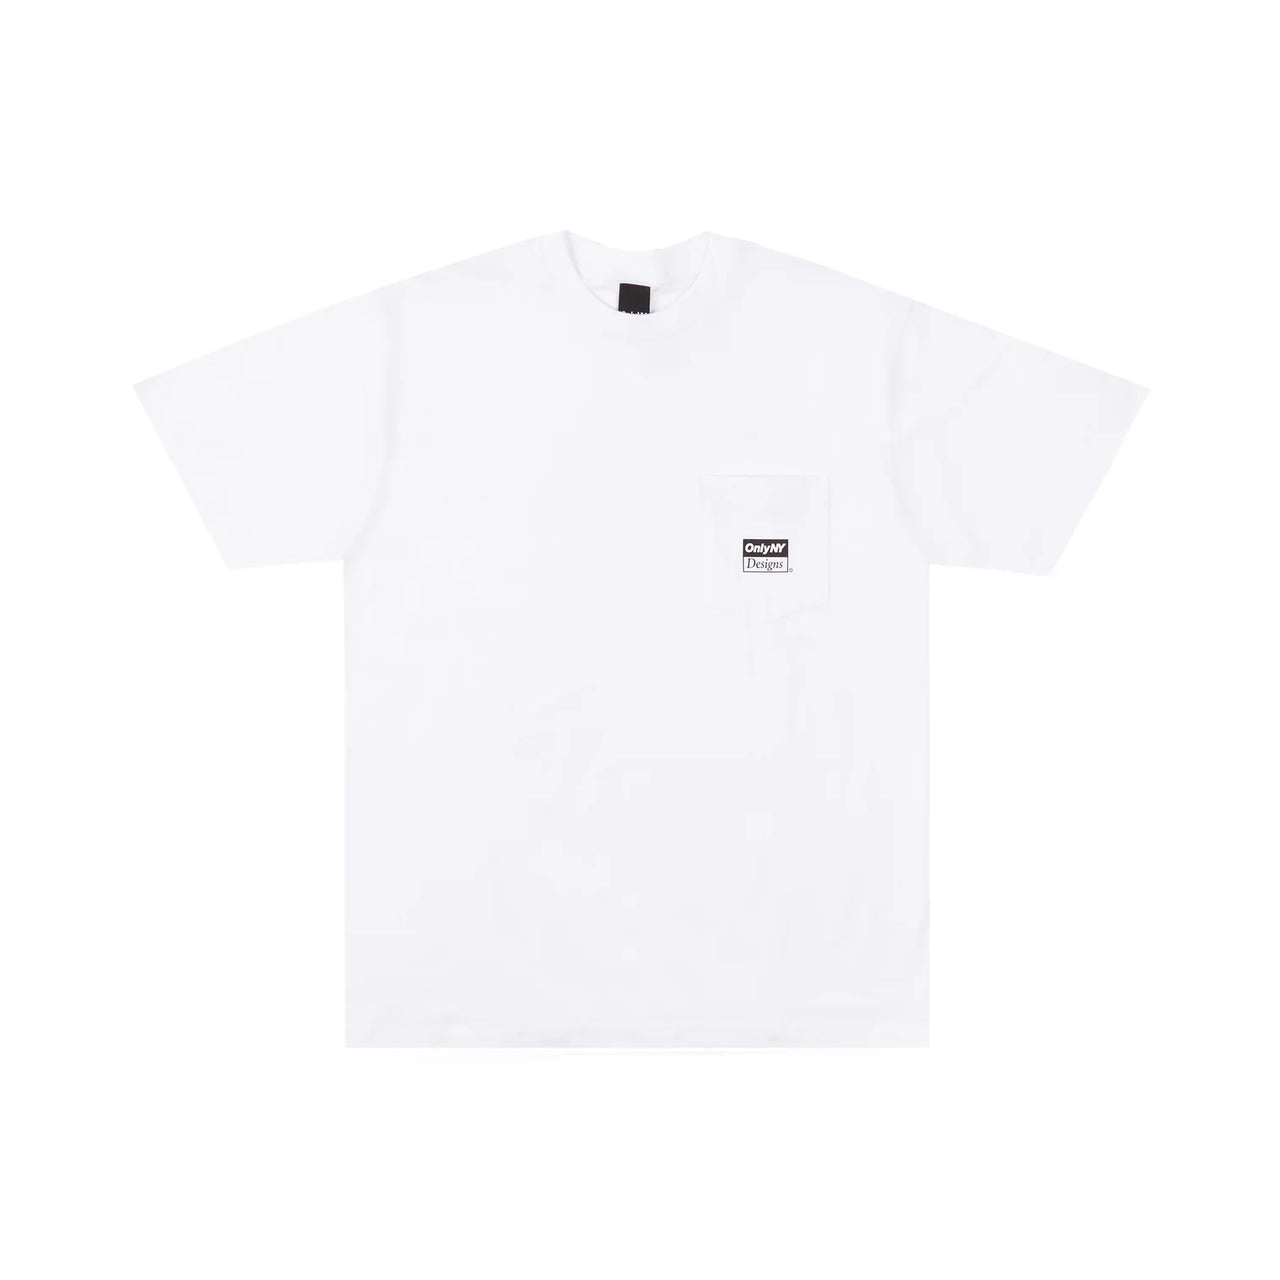 Designs Dept. T-Shirt - White